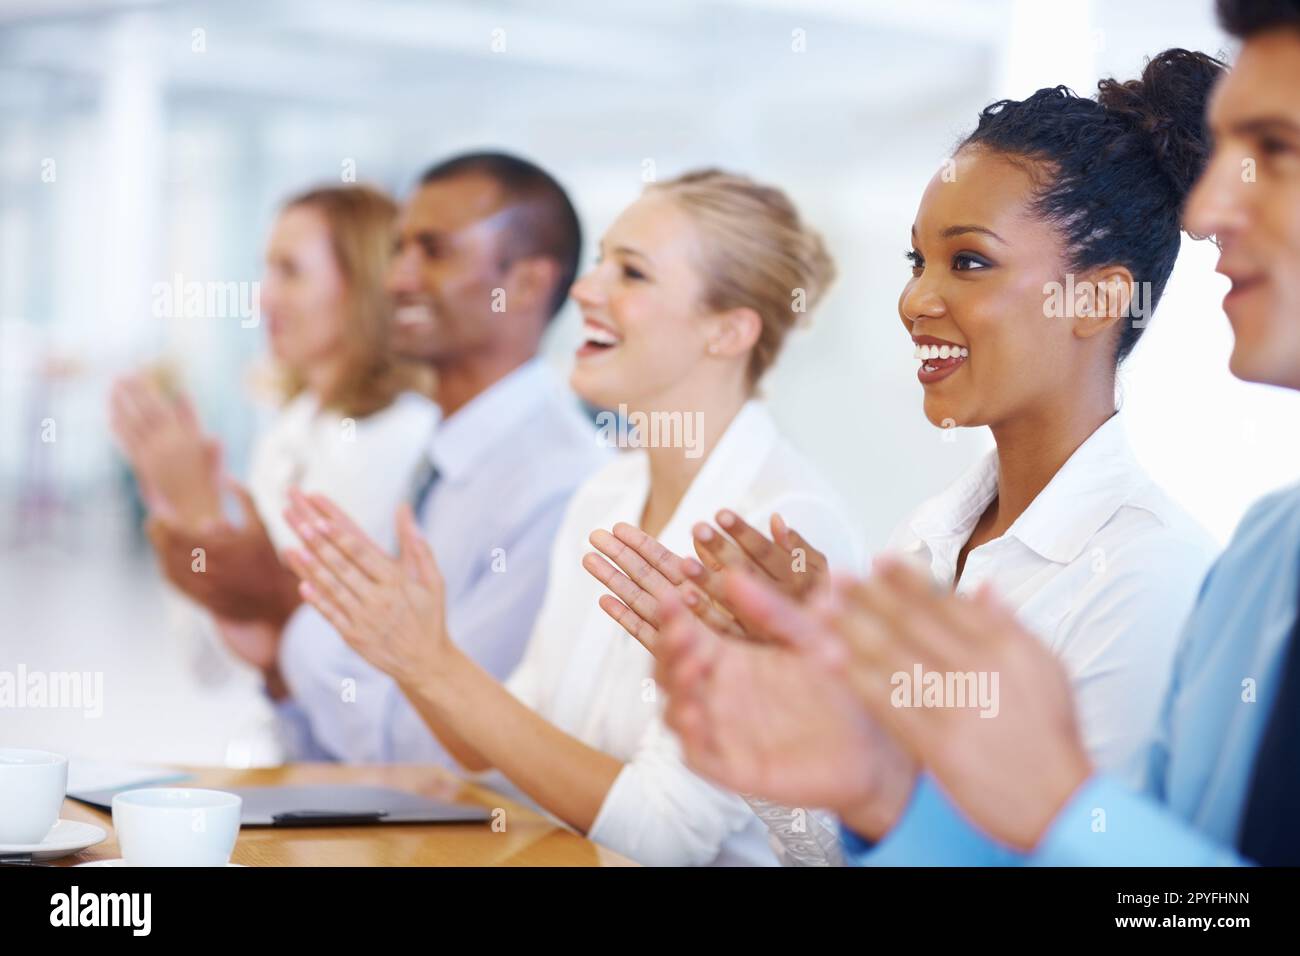 Executives applauding. Portrait of multi racial executives applauding in presentation. Stock Photo